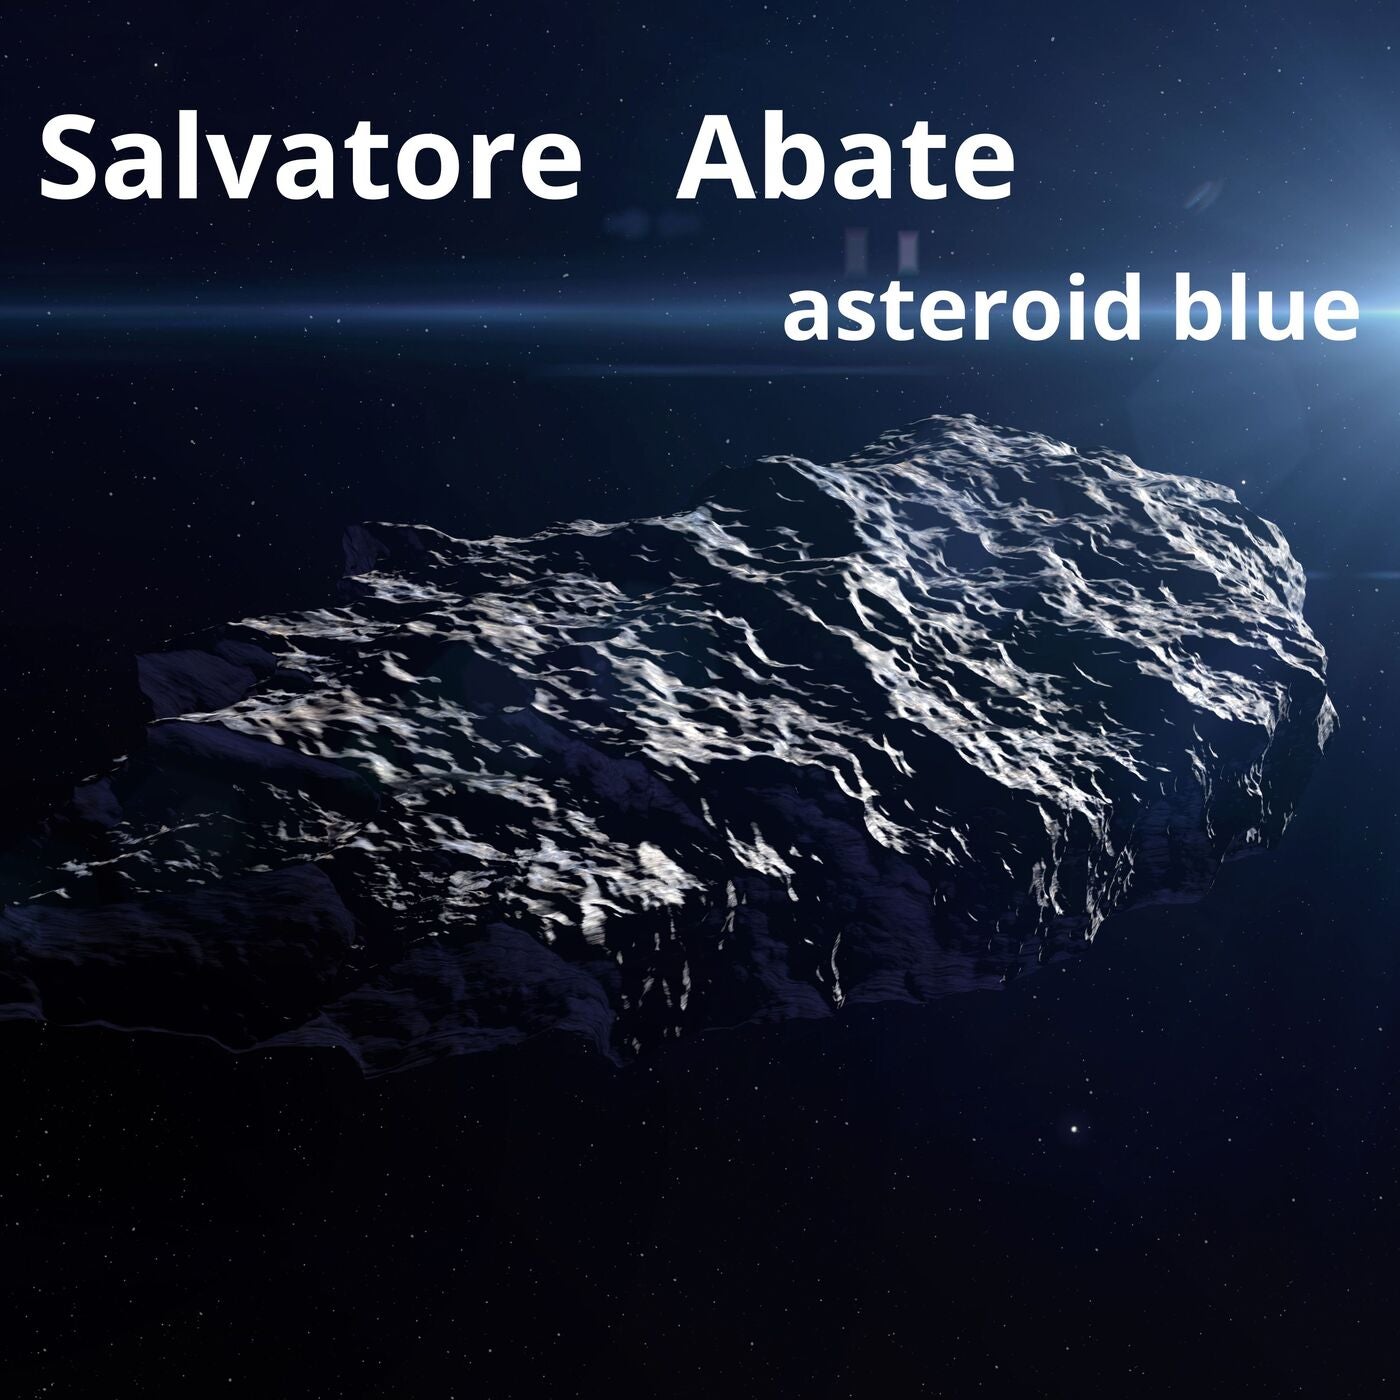 Asteroid blue